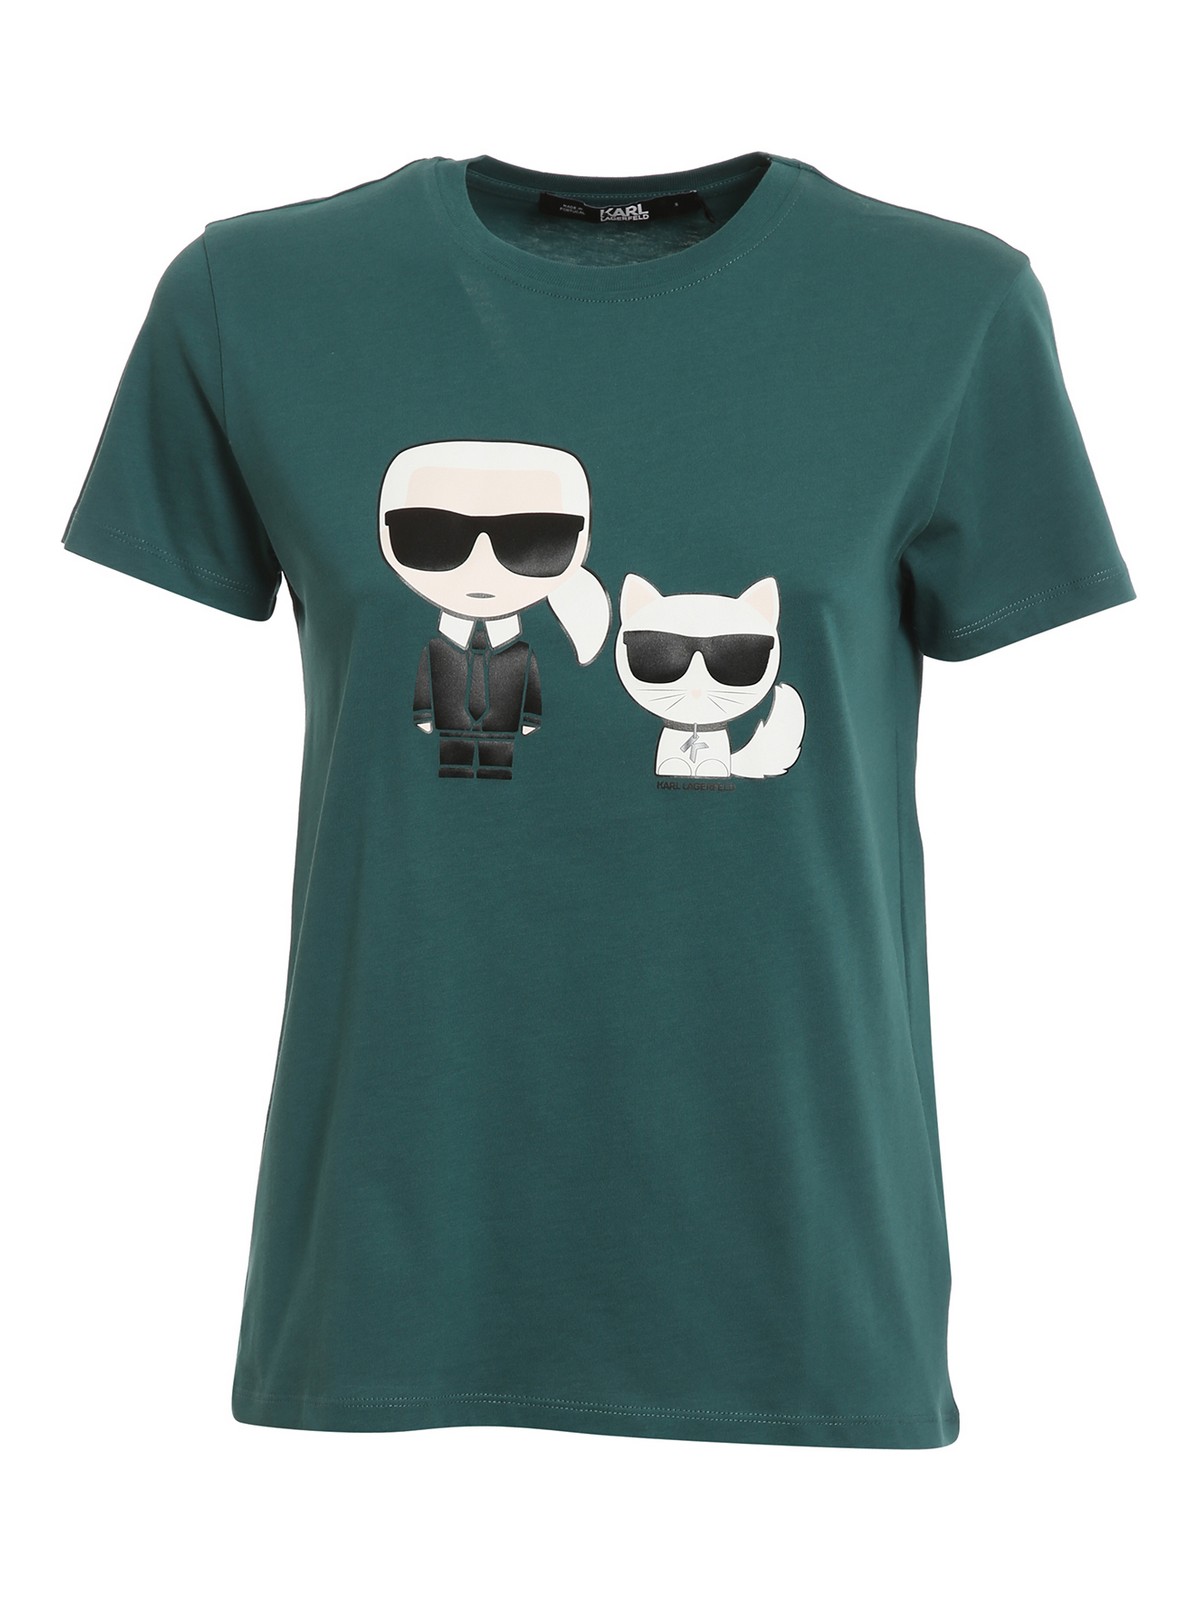 Koe Bel terug jazz T-shirts Karl Lagerfeld - Ikonik Karl and cat print T-shirt - 210W1724652